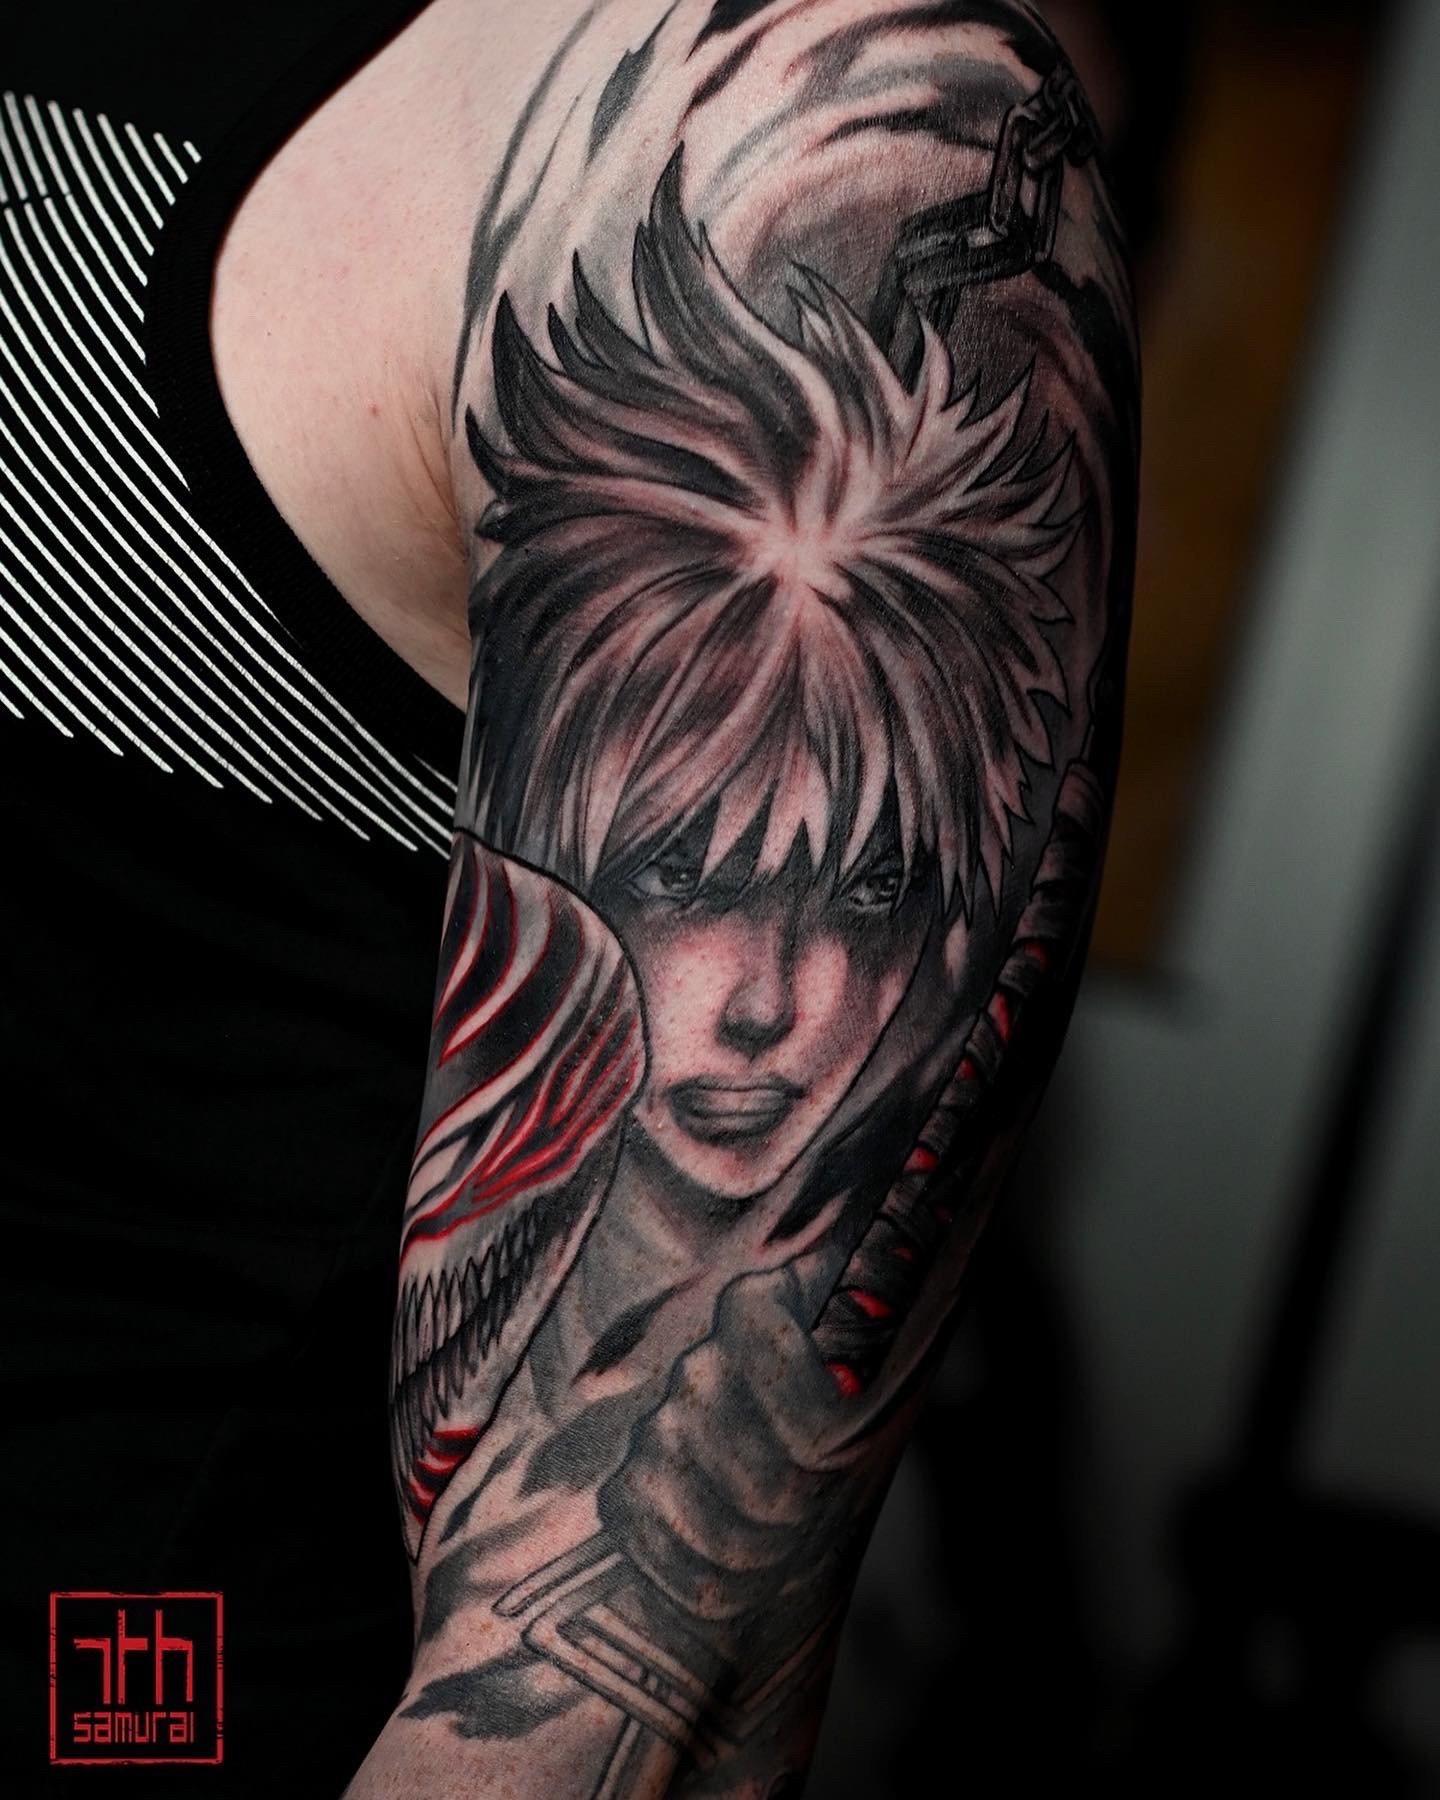 Ichigo Kurosaki   Men's Bleach anime manga tattoo with red highlights   asian artist: Kai 7th Samurai. YEG Edmonton, Alberta, Canada 2023 best 2024 